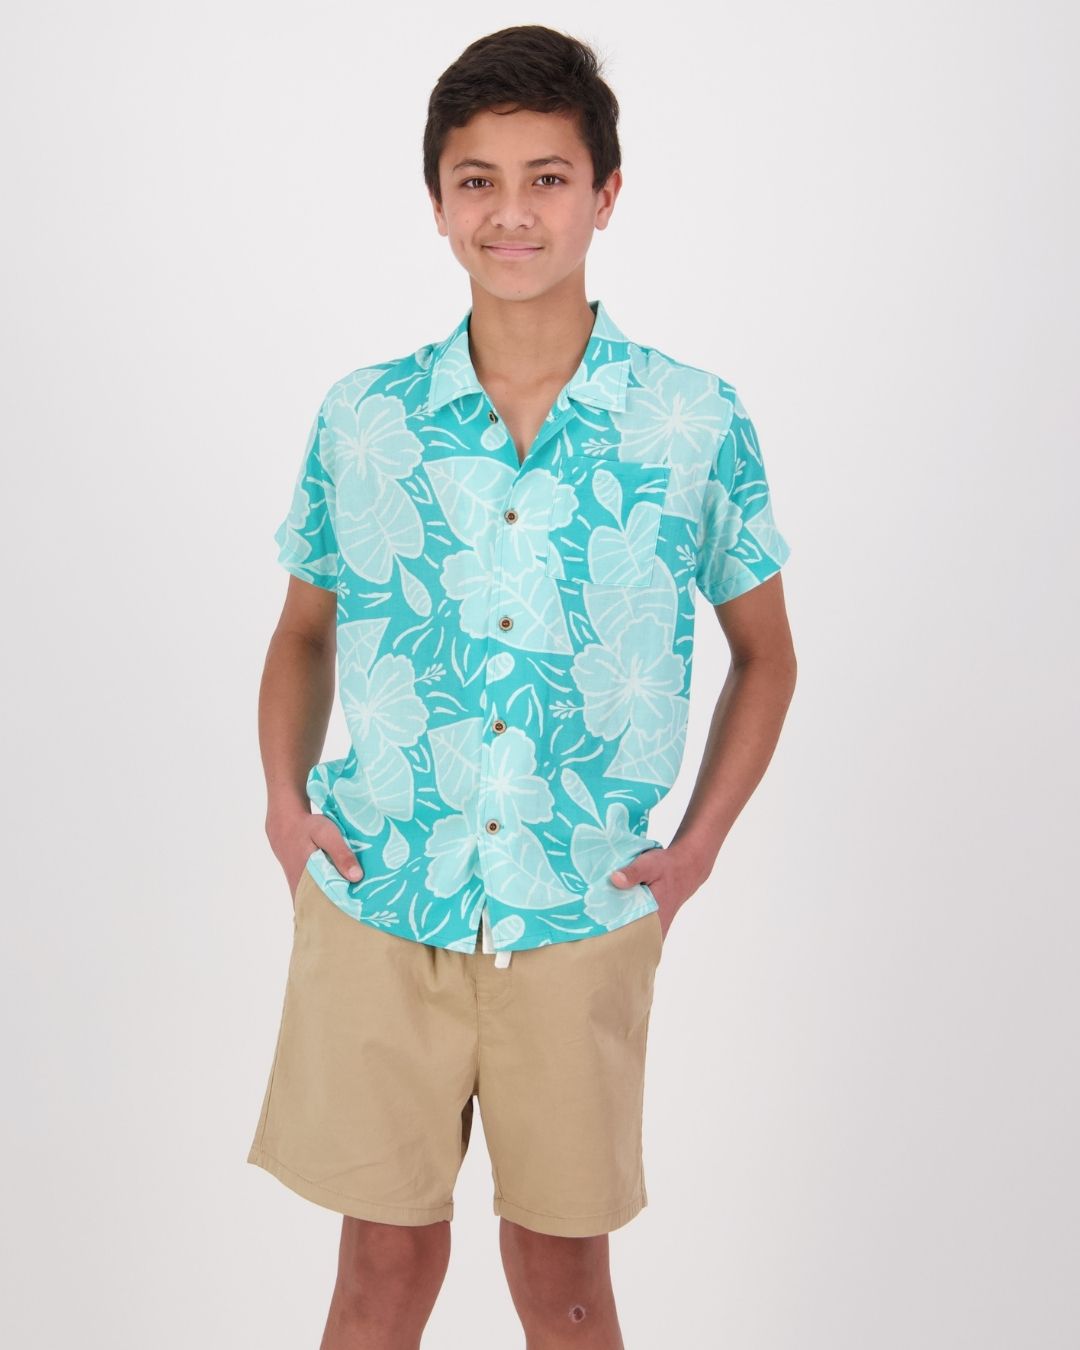 Kanoa Short Sleeve Teen Island Shirt - Royal Hibiscus Tide - Blue